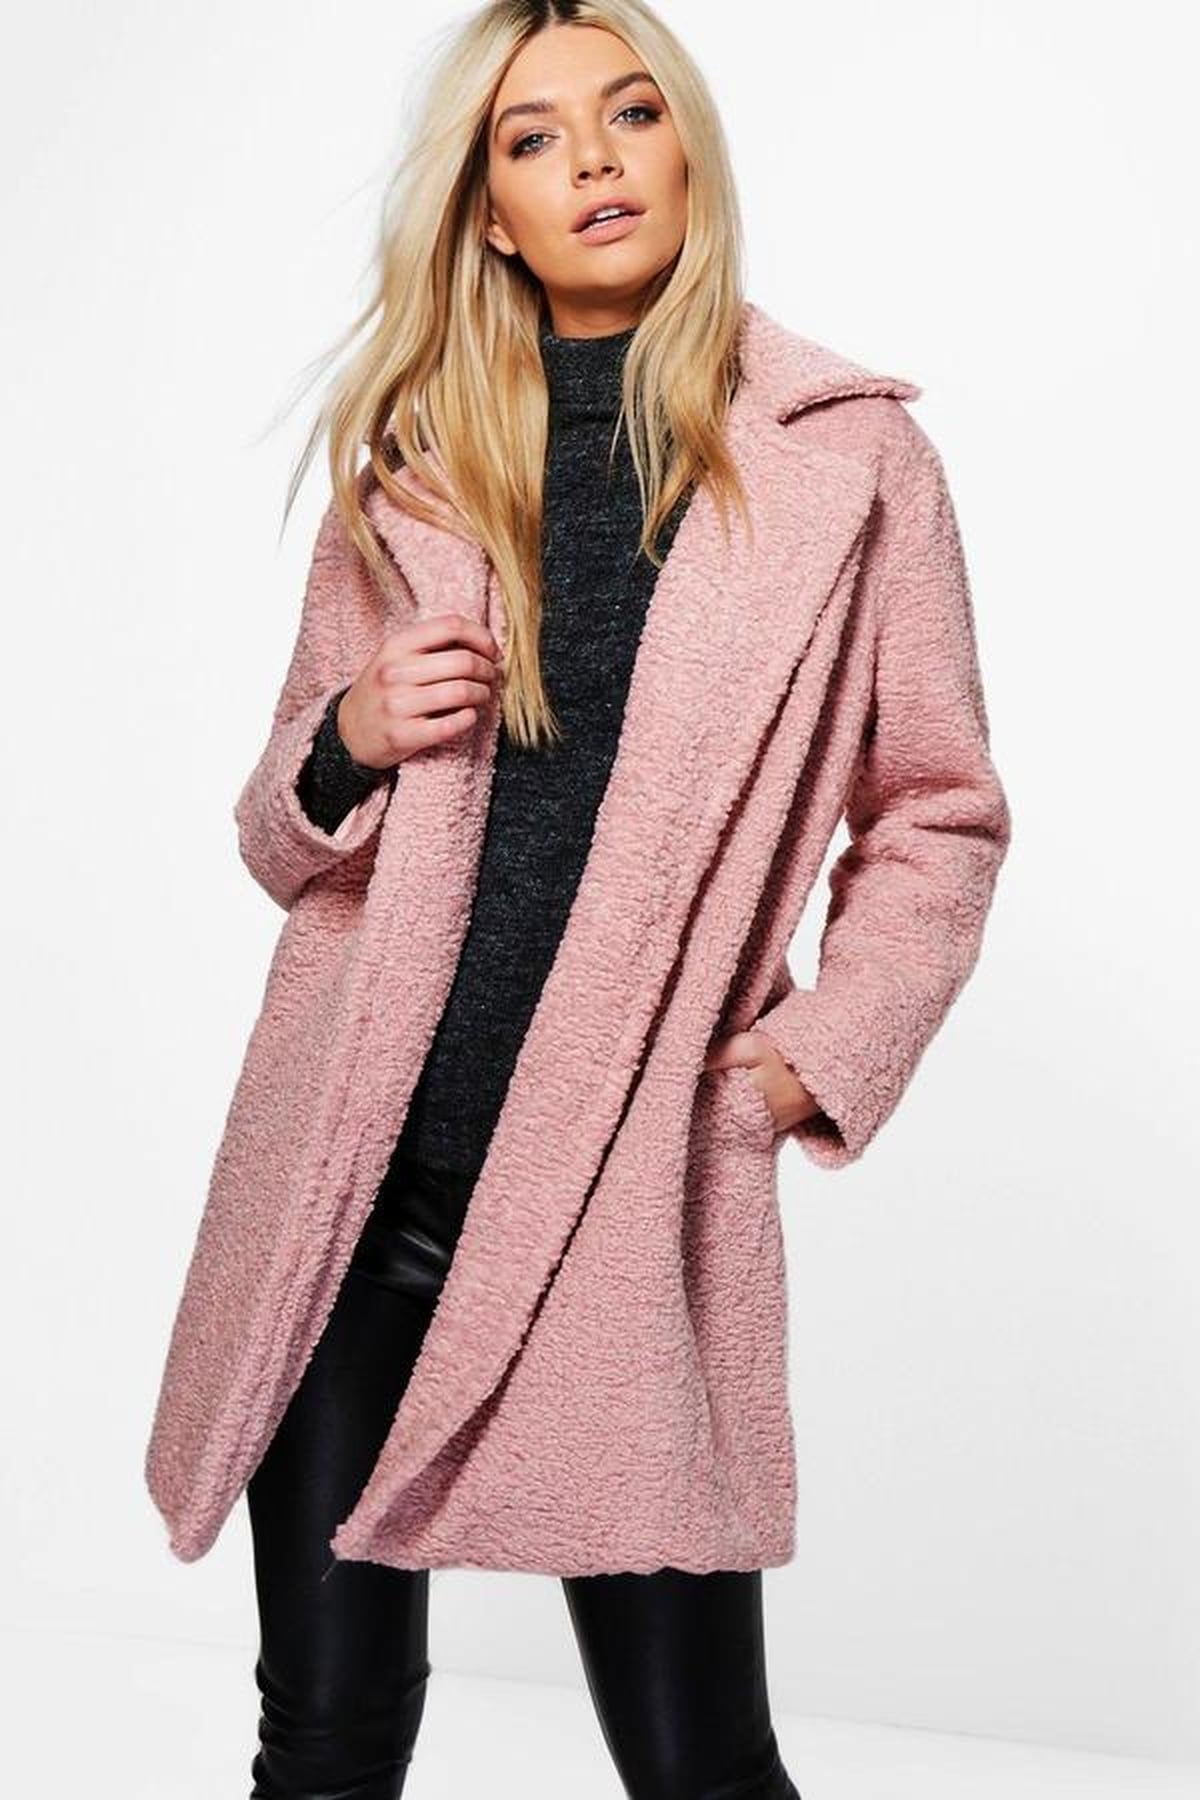 Melania Trump Pink Acne Studios Coat | POPSUGAR Fashion